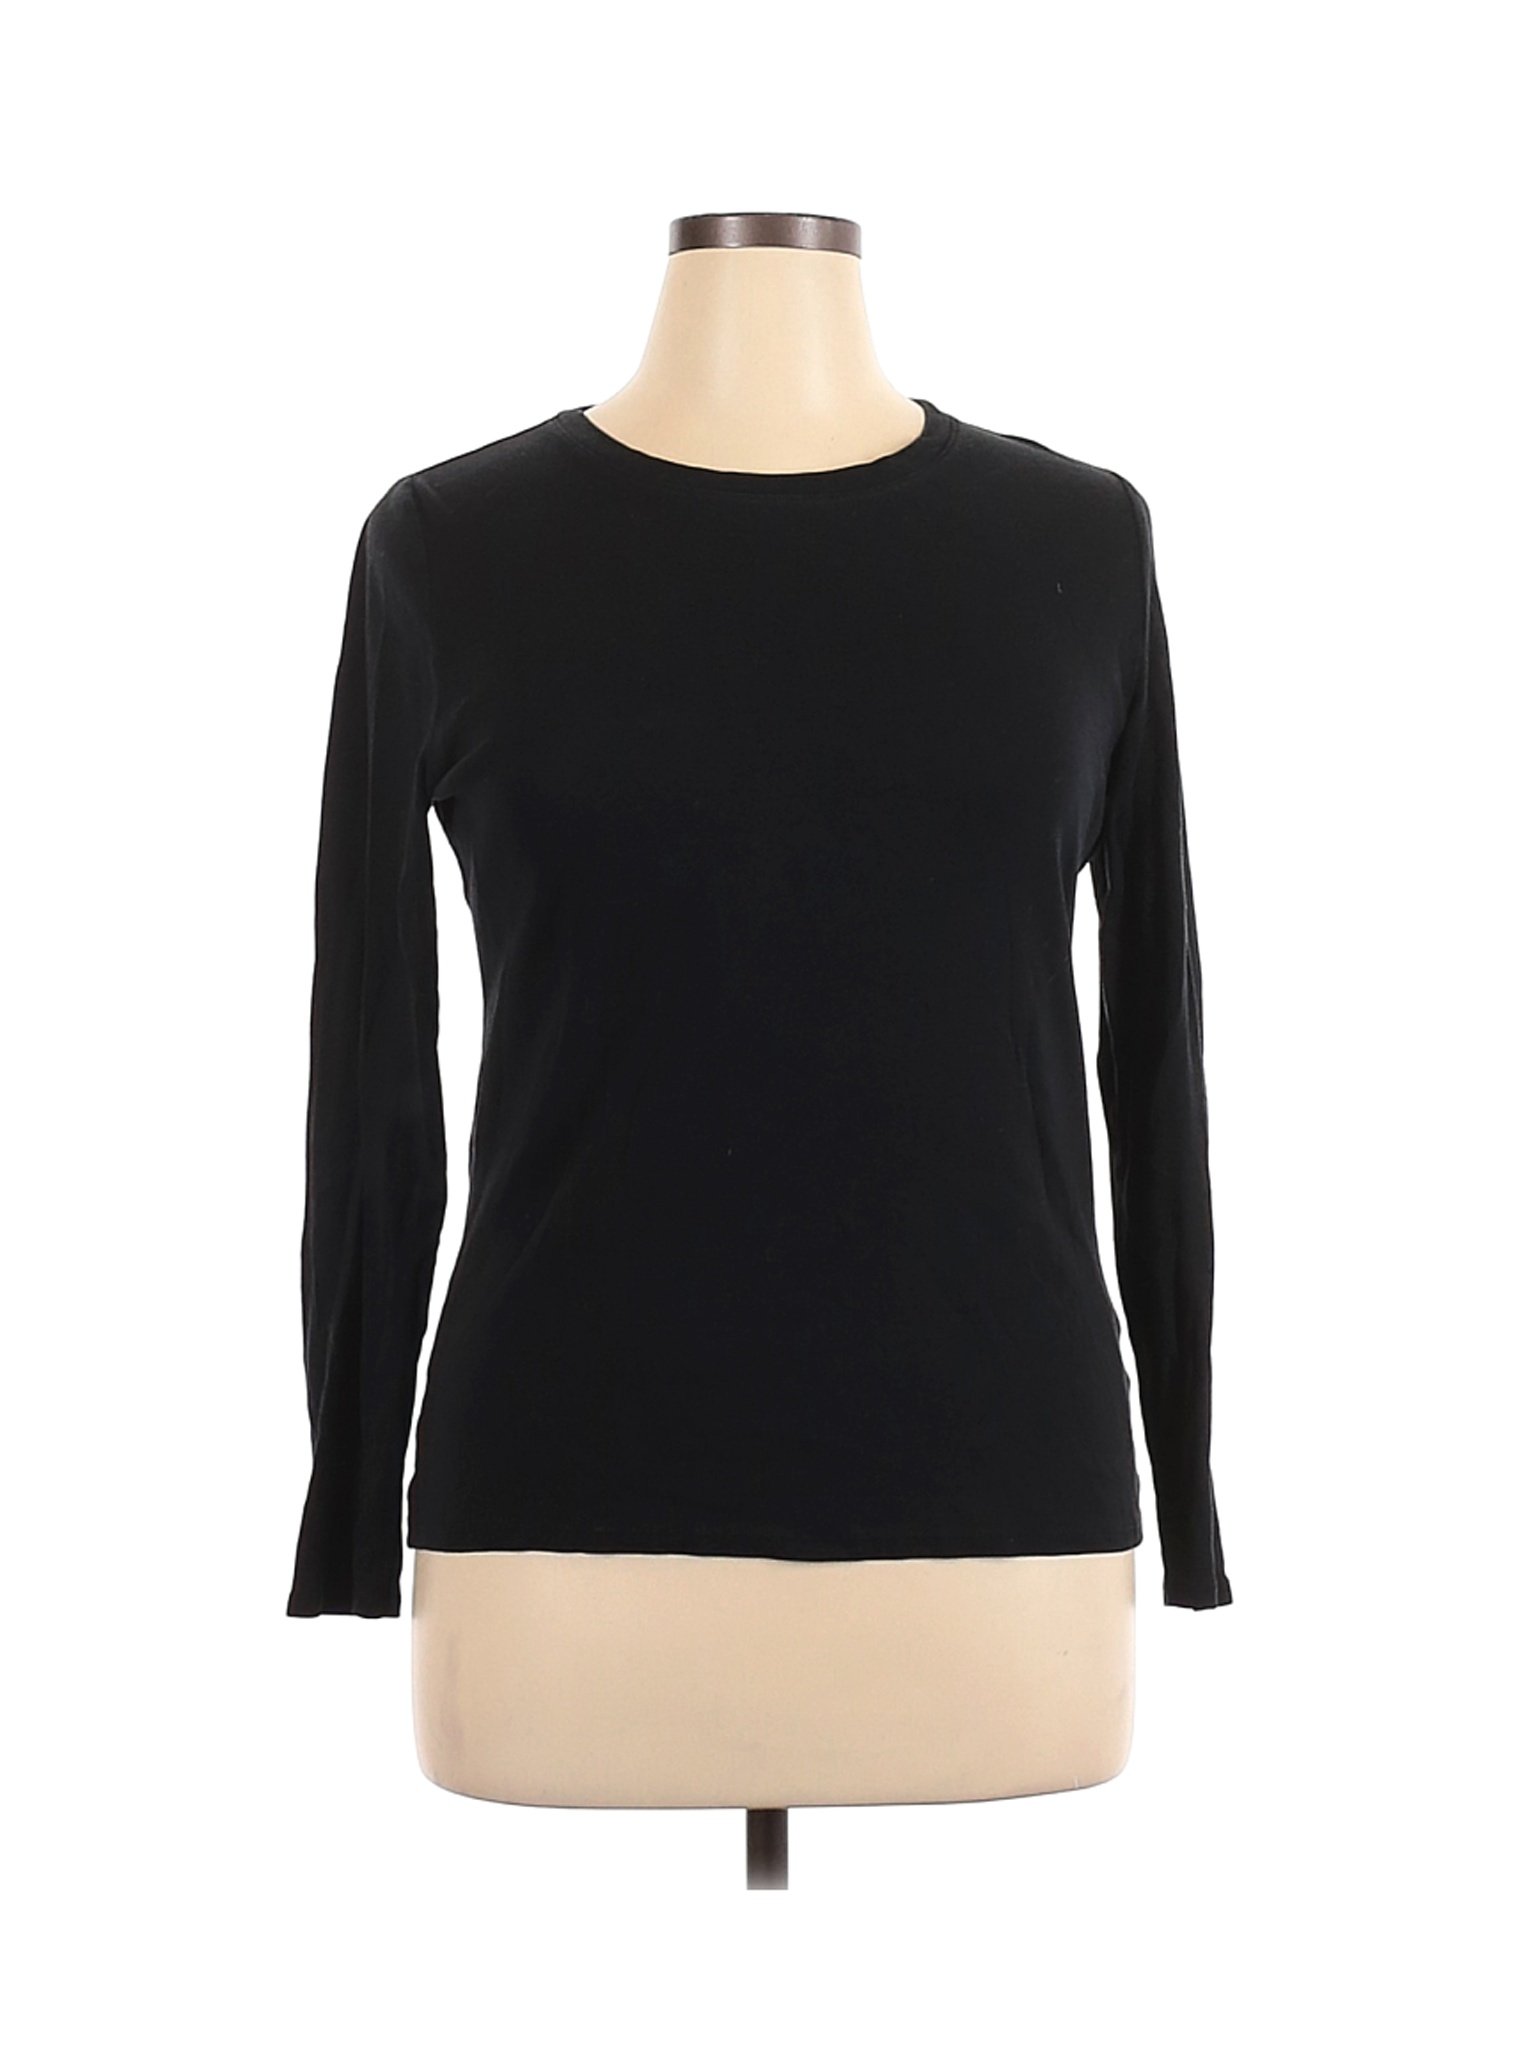 Merona Women Black Long Sleeve T-Shirt XL | eBay